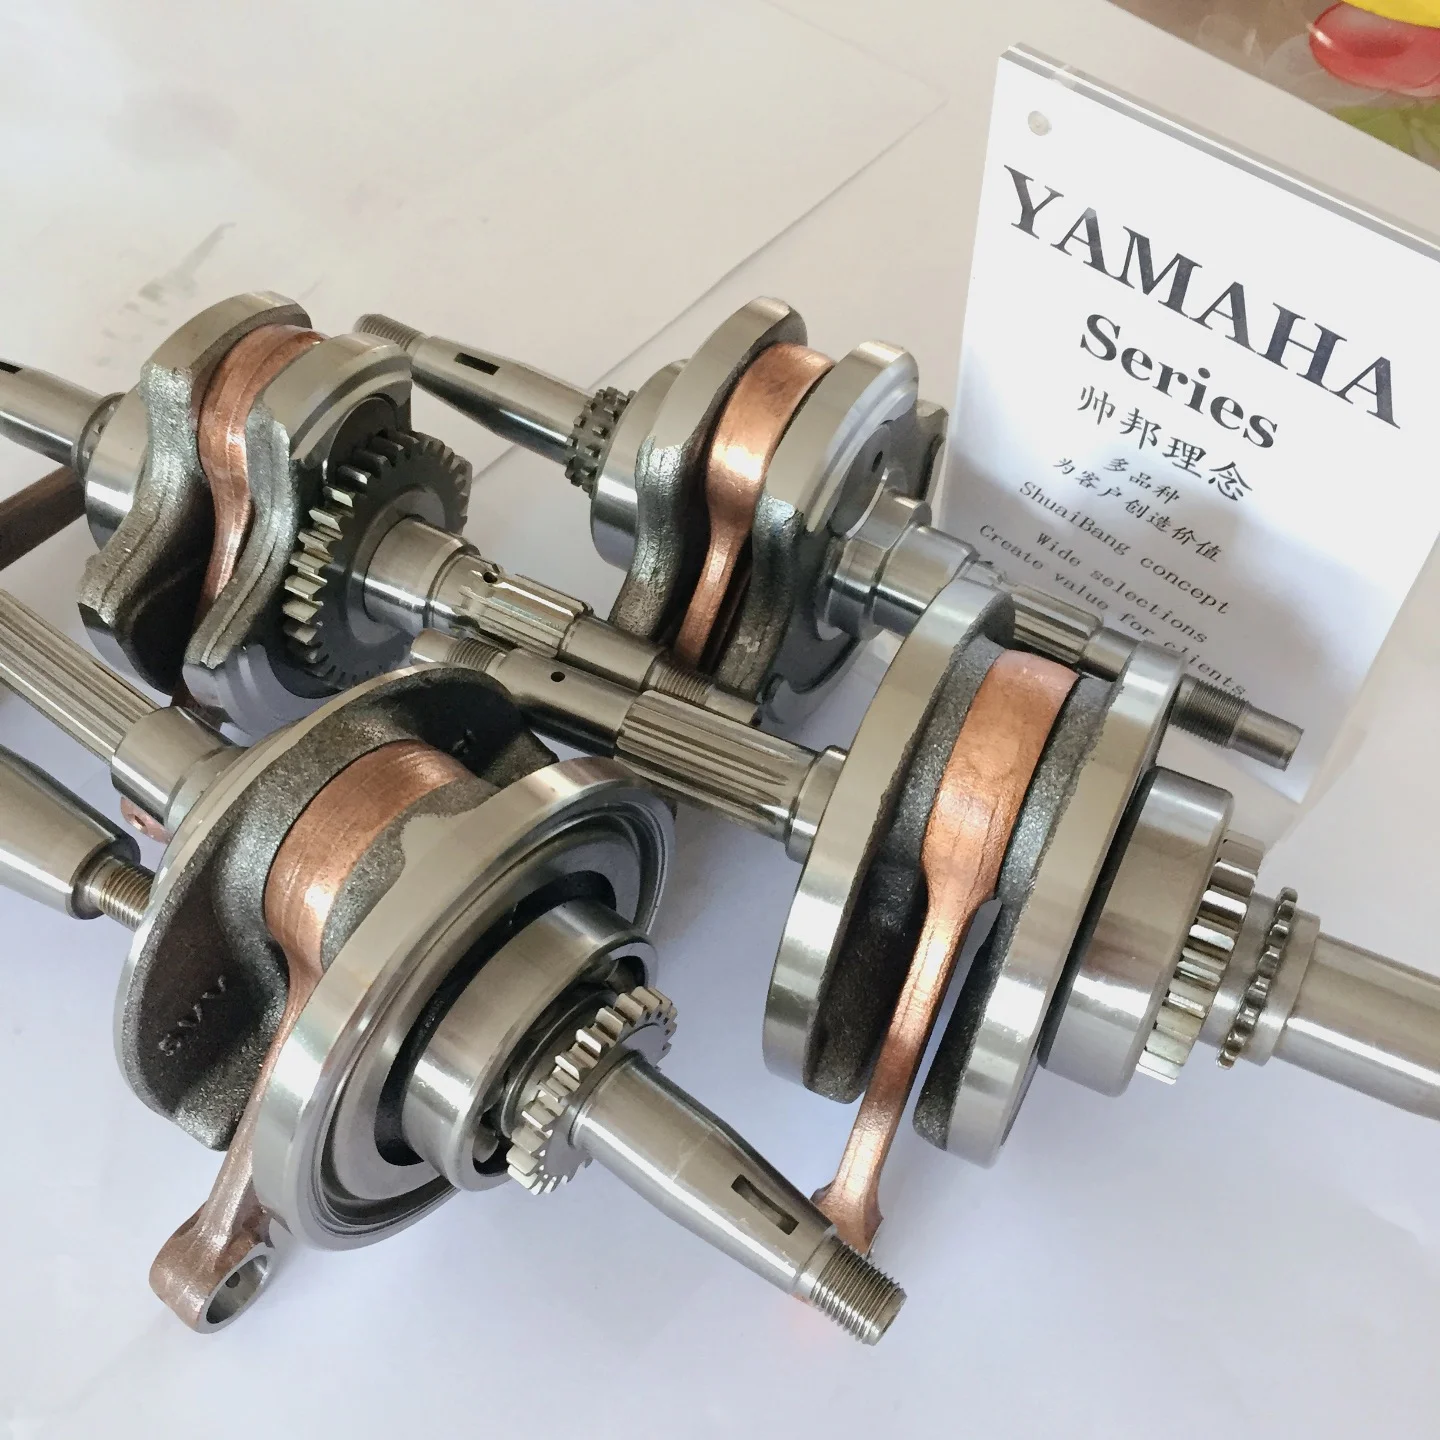 yamaha rx 100 spare parts price list